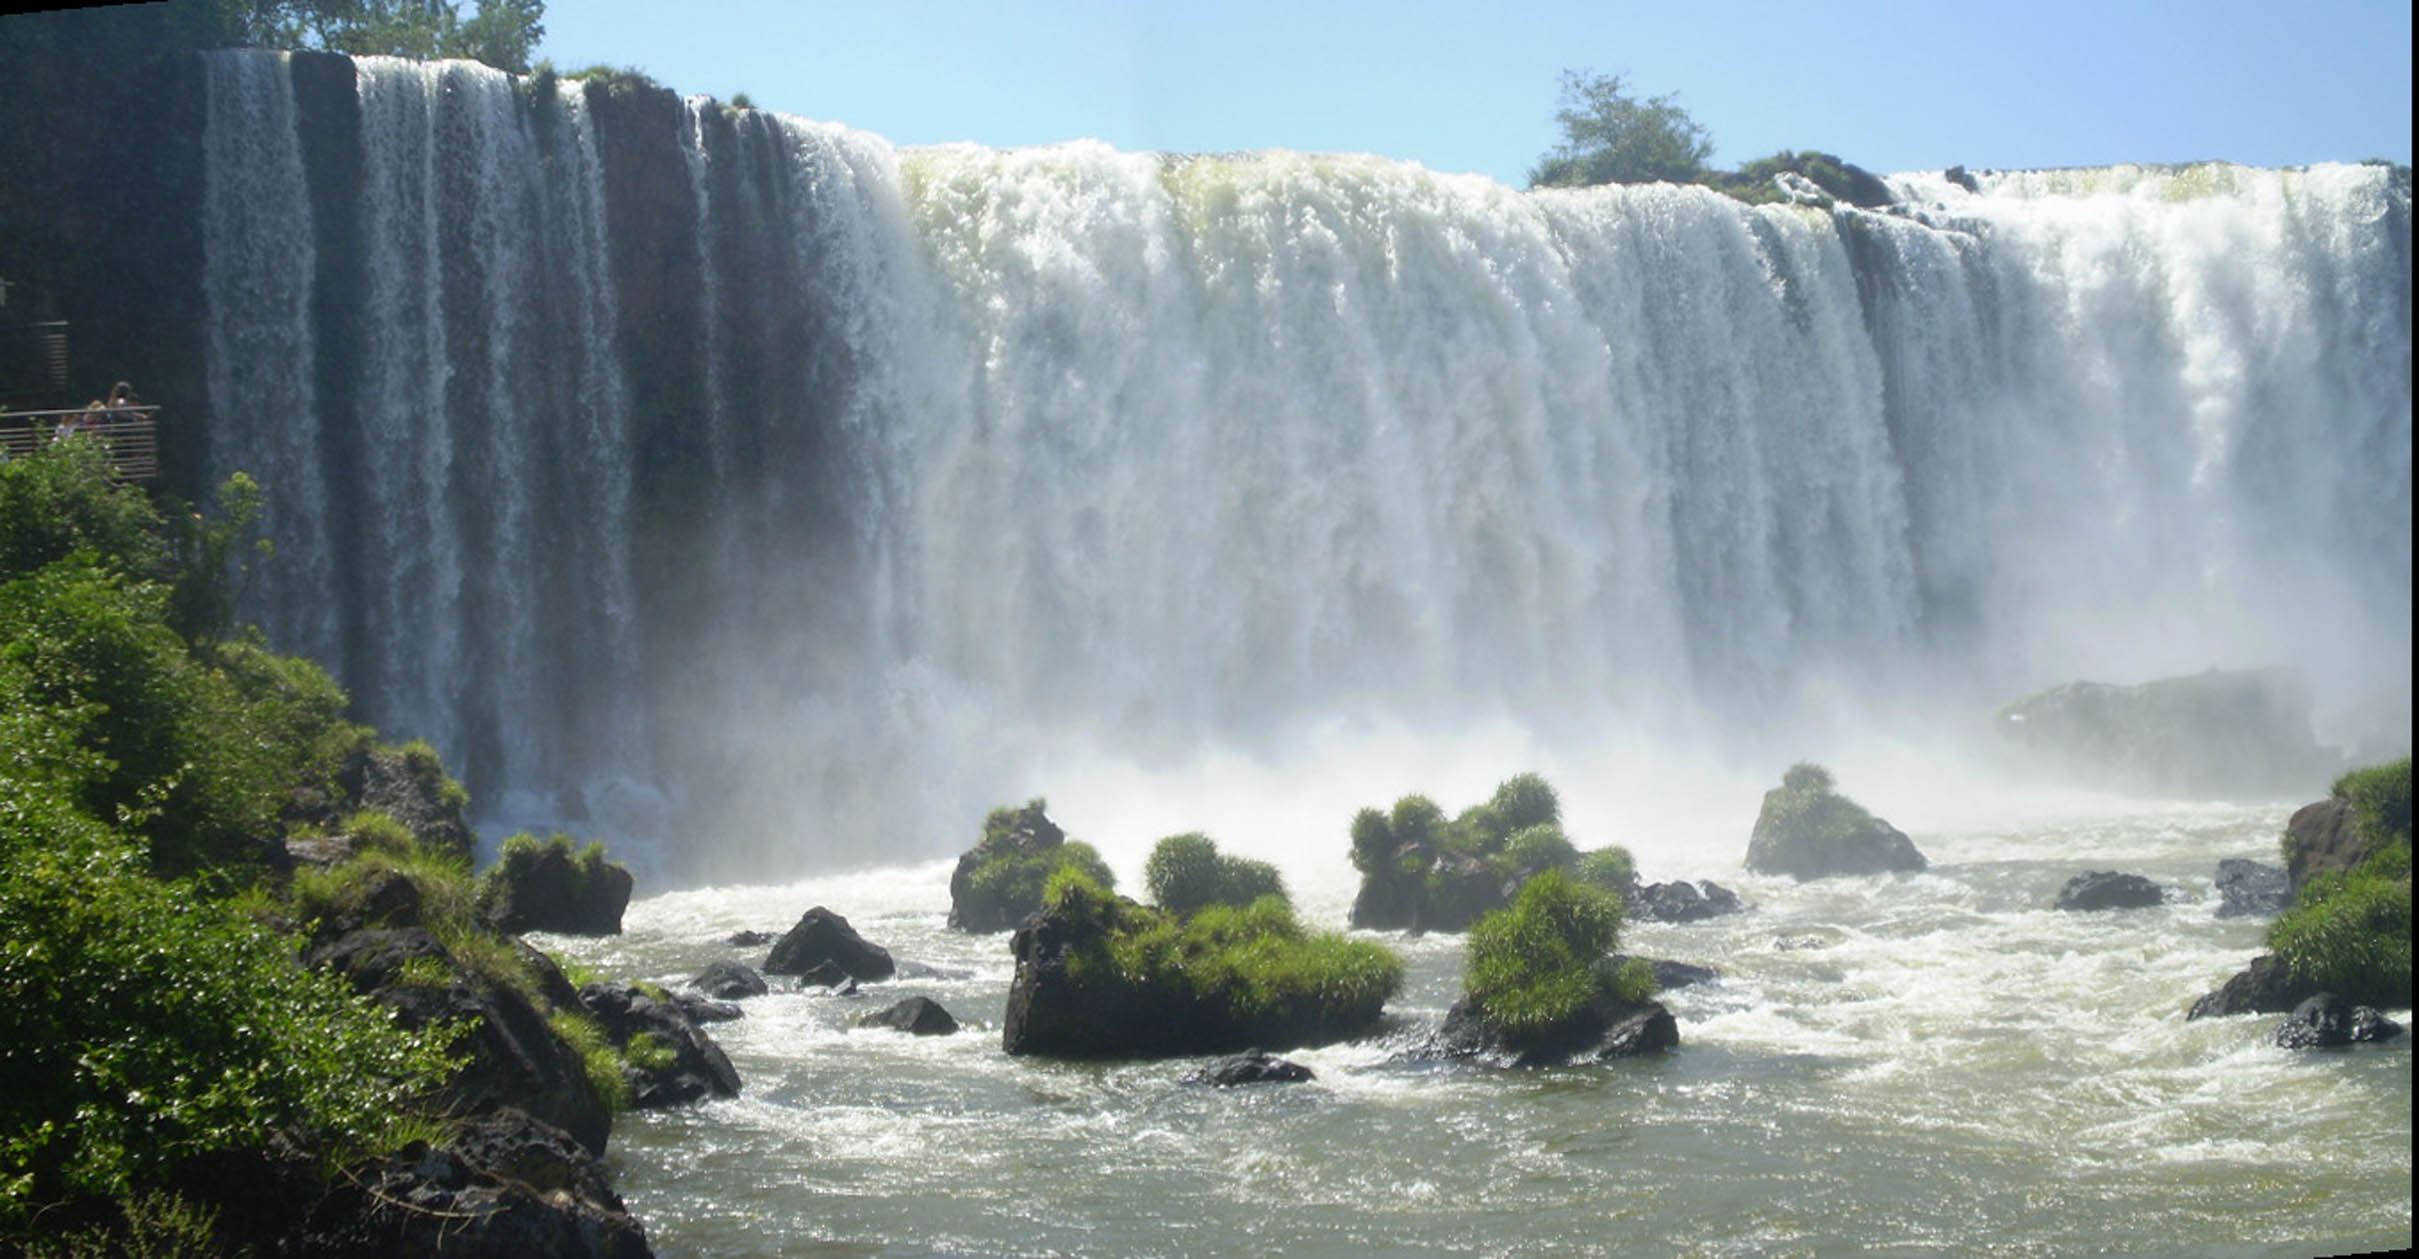 Cataratas Del Iguazú Revista Cabal